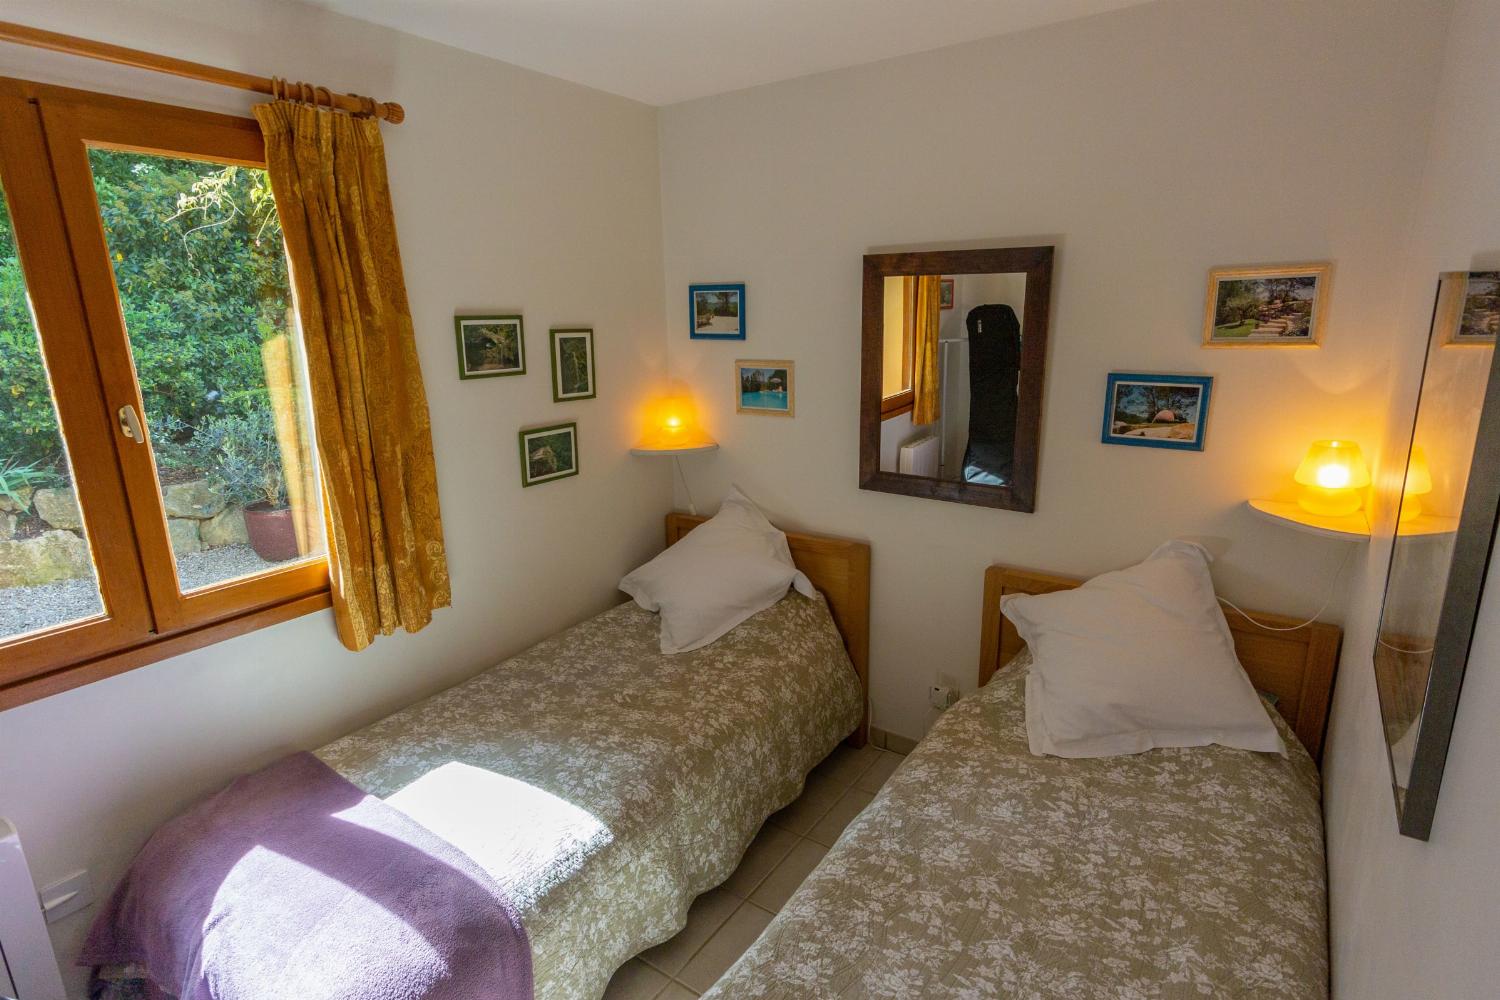 Bedroom | Vacation villa in Provence